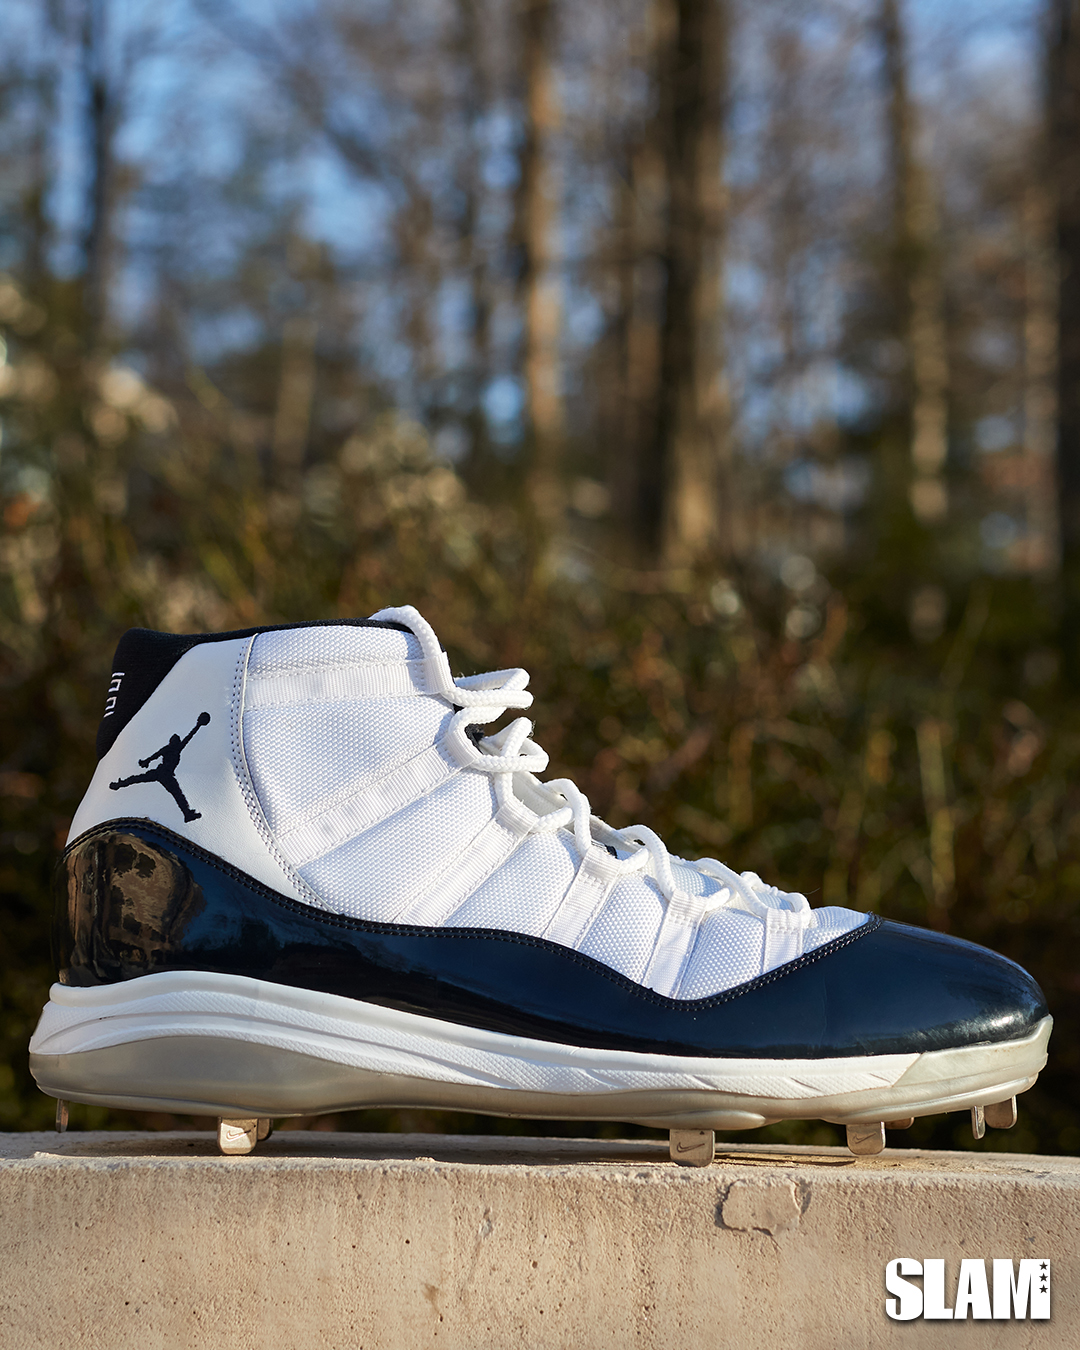 CC Sabathia Nike Air Jordan 11 Retro Promo Sample Baseball Cleats | Size 15, Sneaker